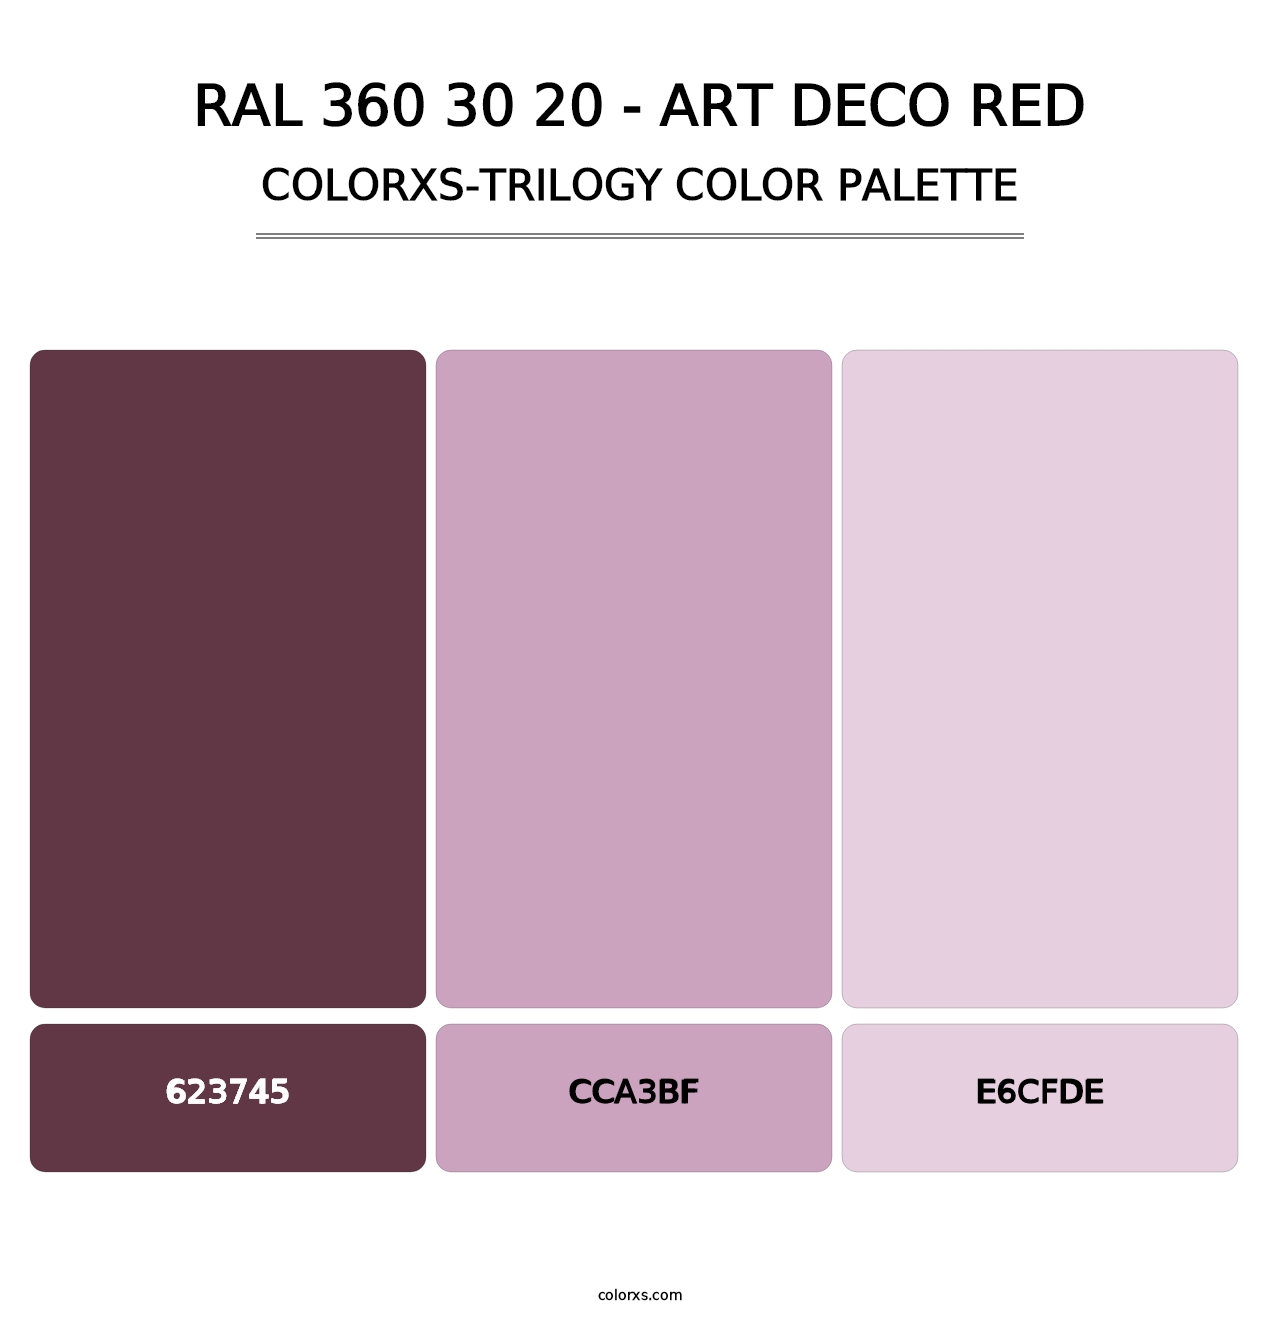 RAL 360 30 20 - Art Deco Red - Colorxs Trilogy Palette